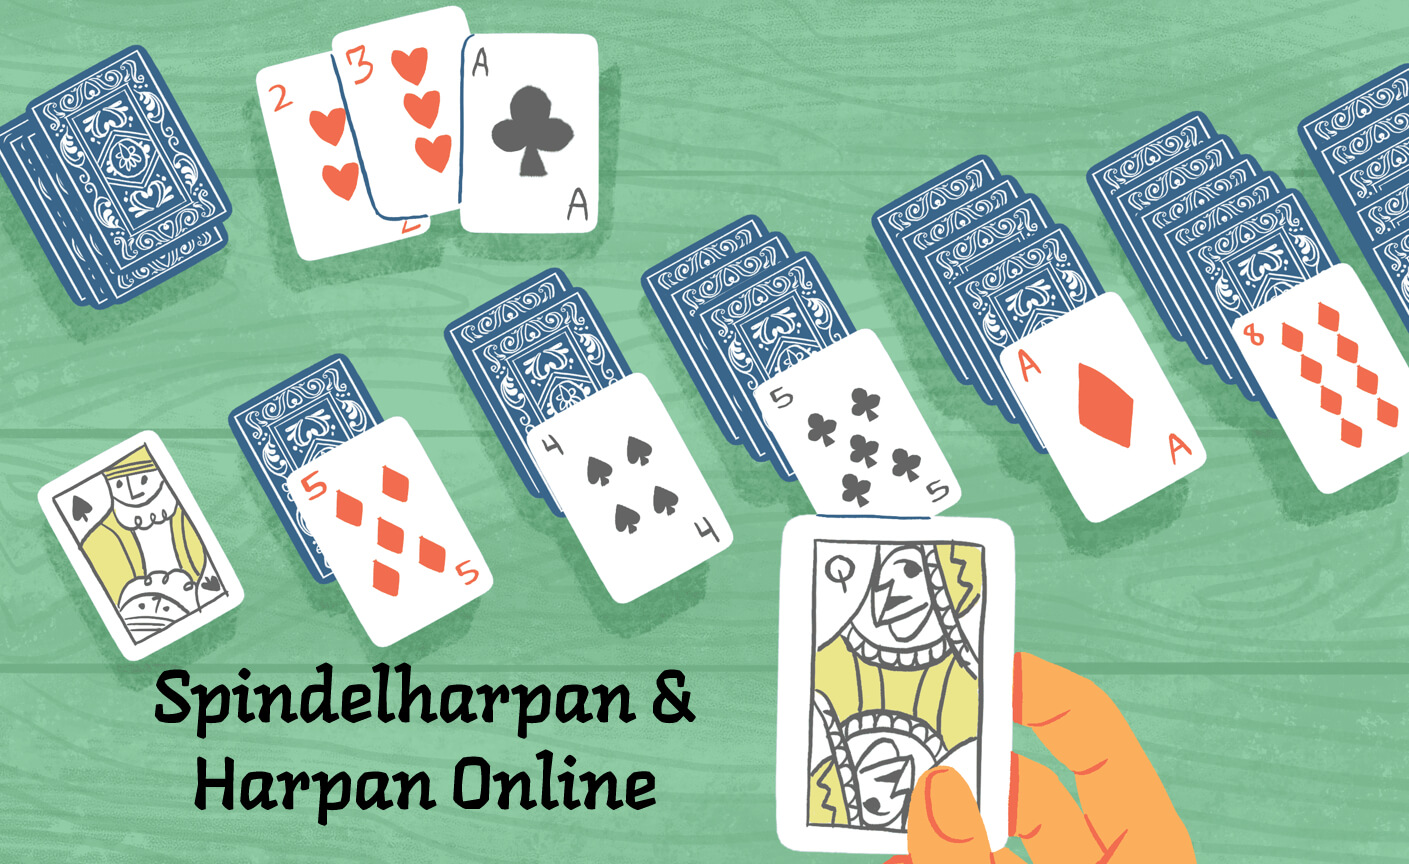 Spindelharpan med texten: Spindelharpan & Harpan Online